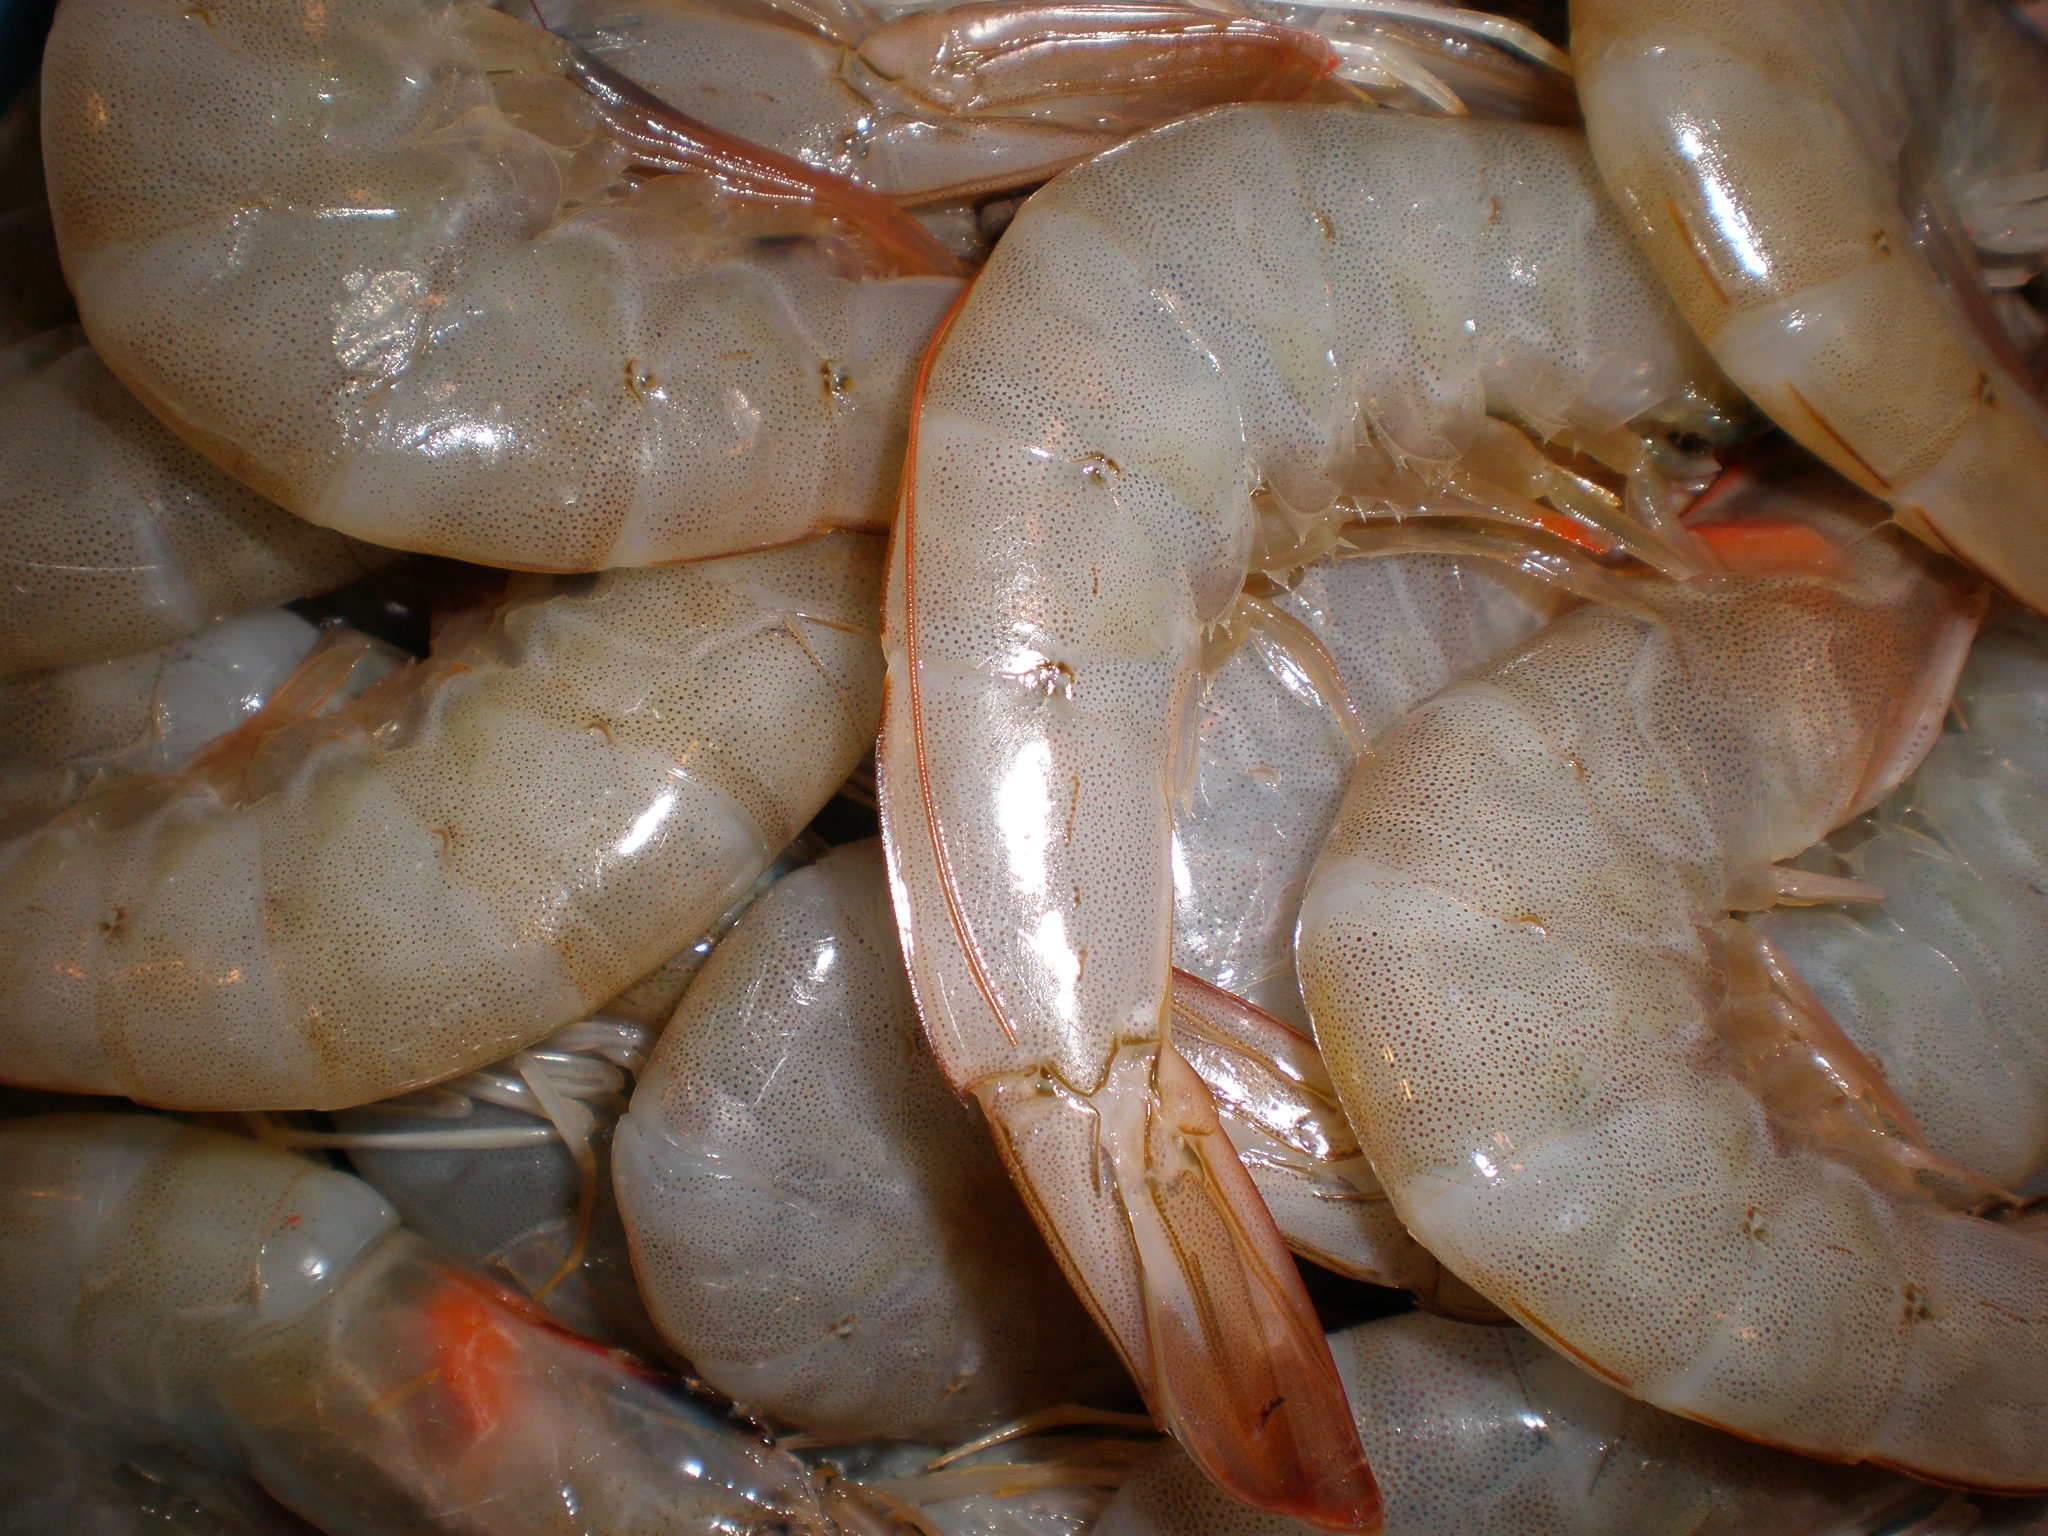 File:Detail of raw shrimp.JPG - Wikimedia Commons